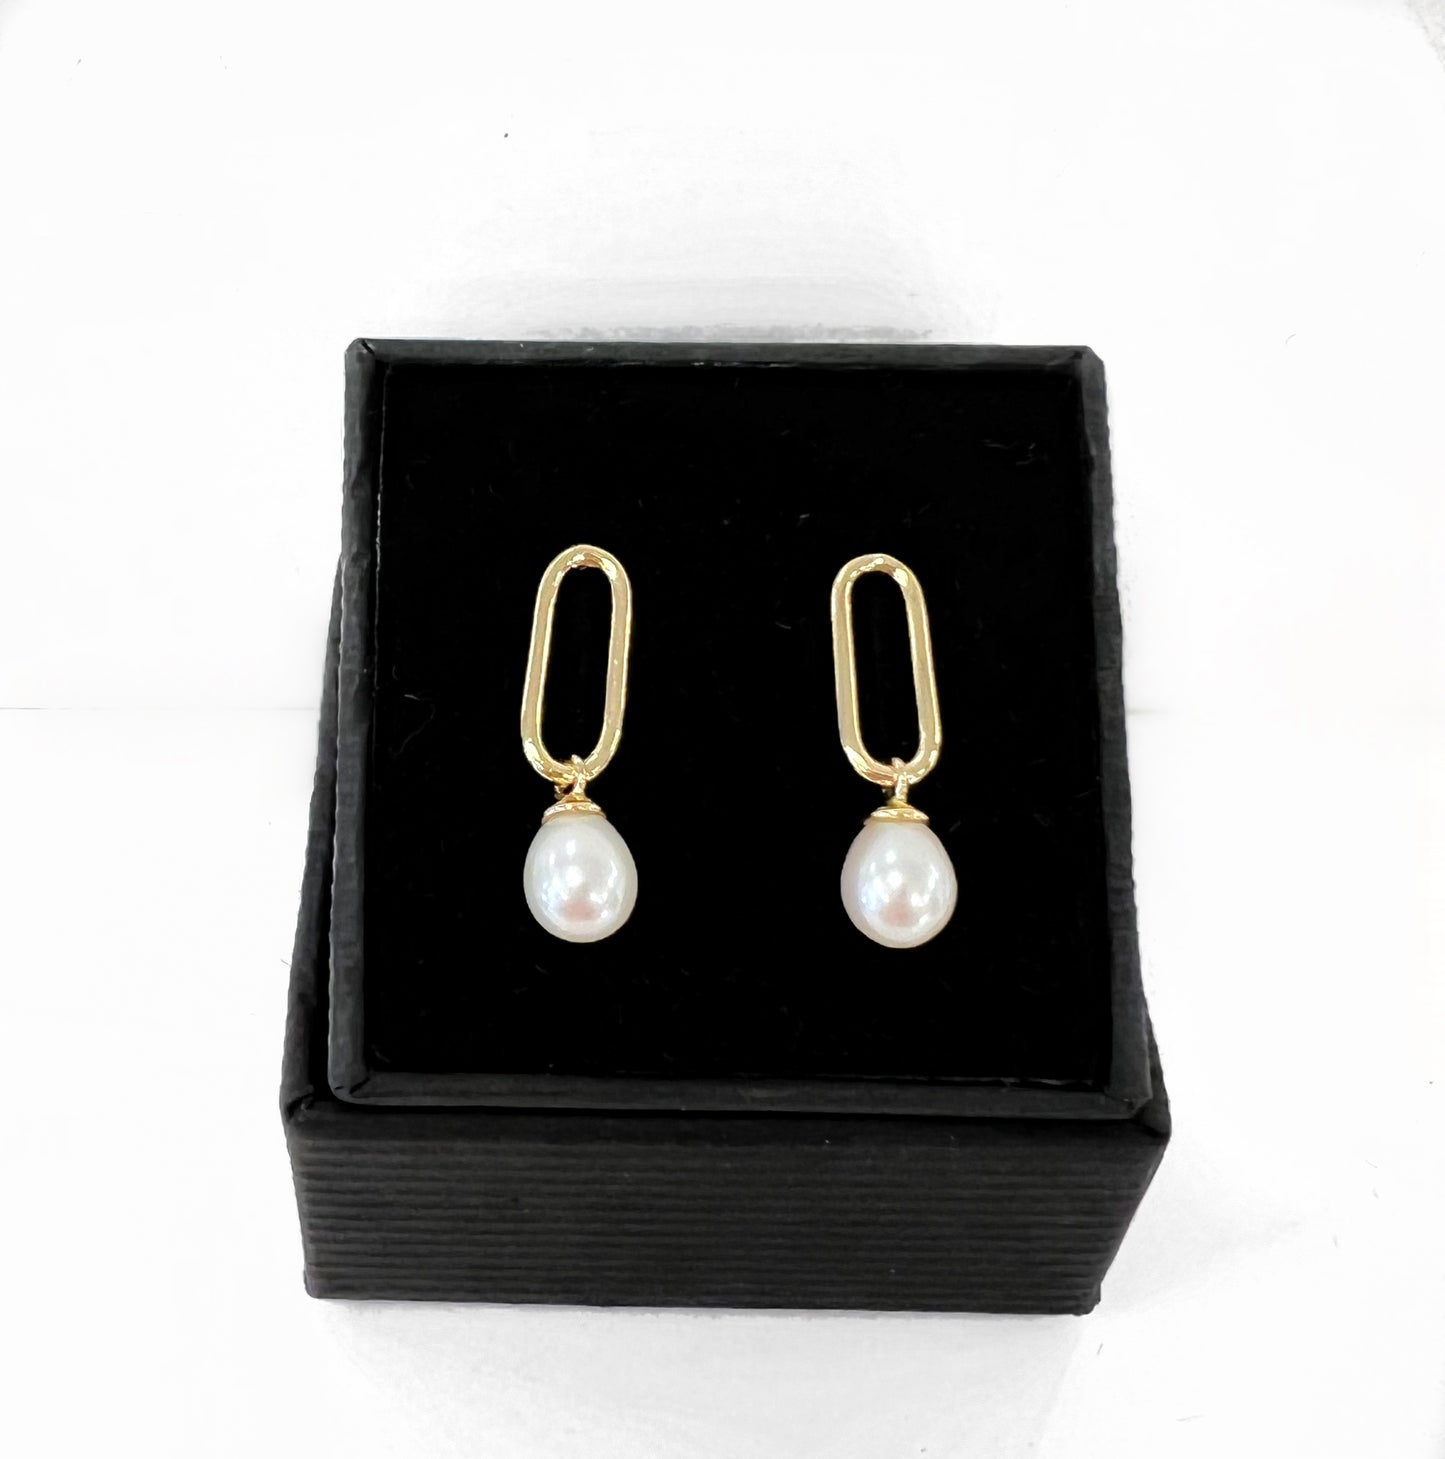 Gold plated modern pearl stud earrings